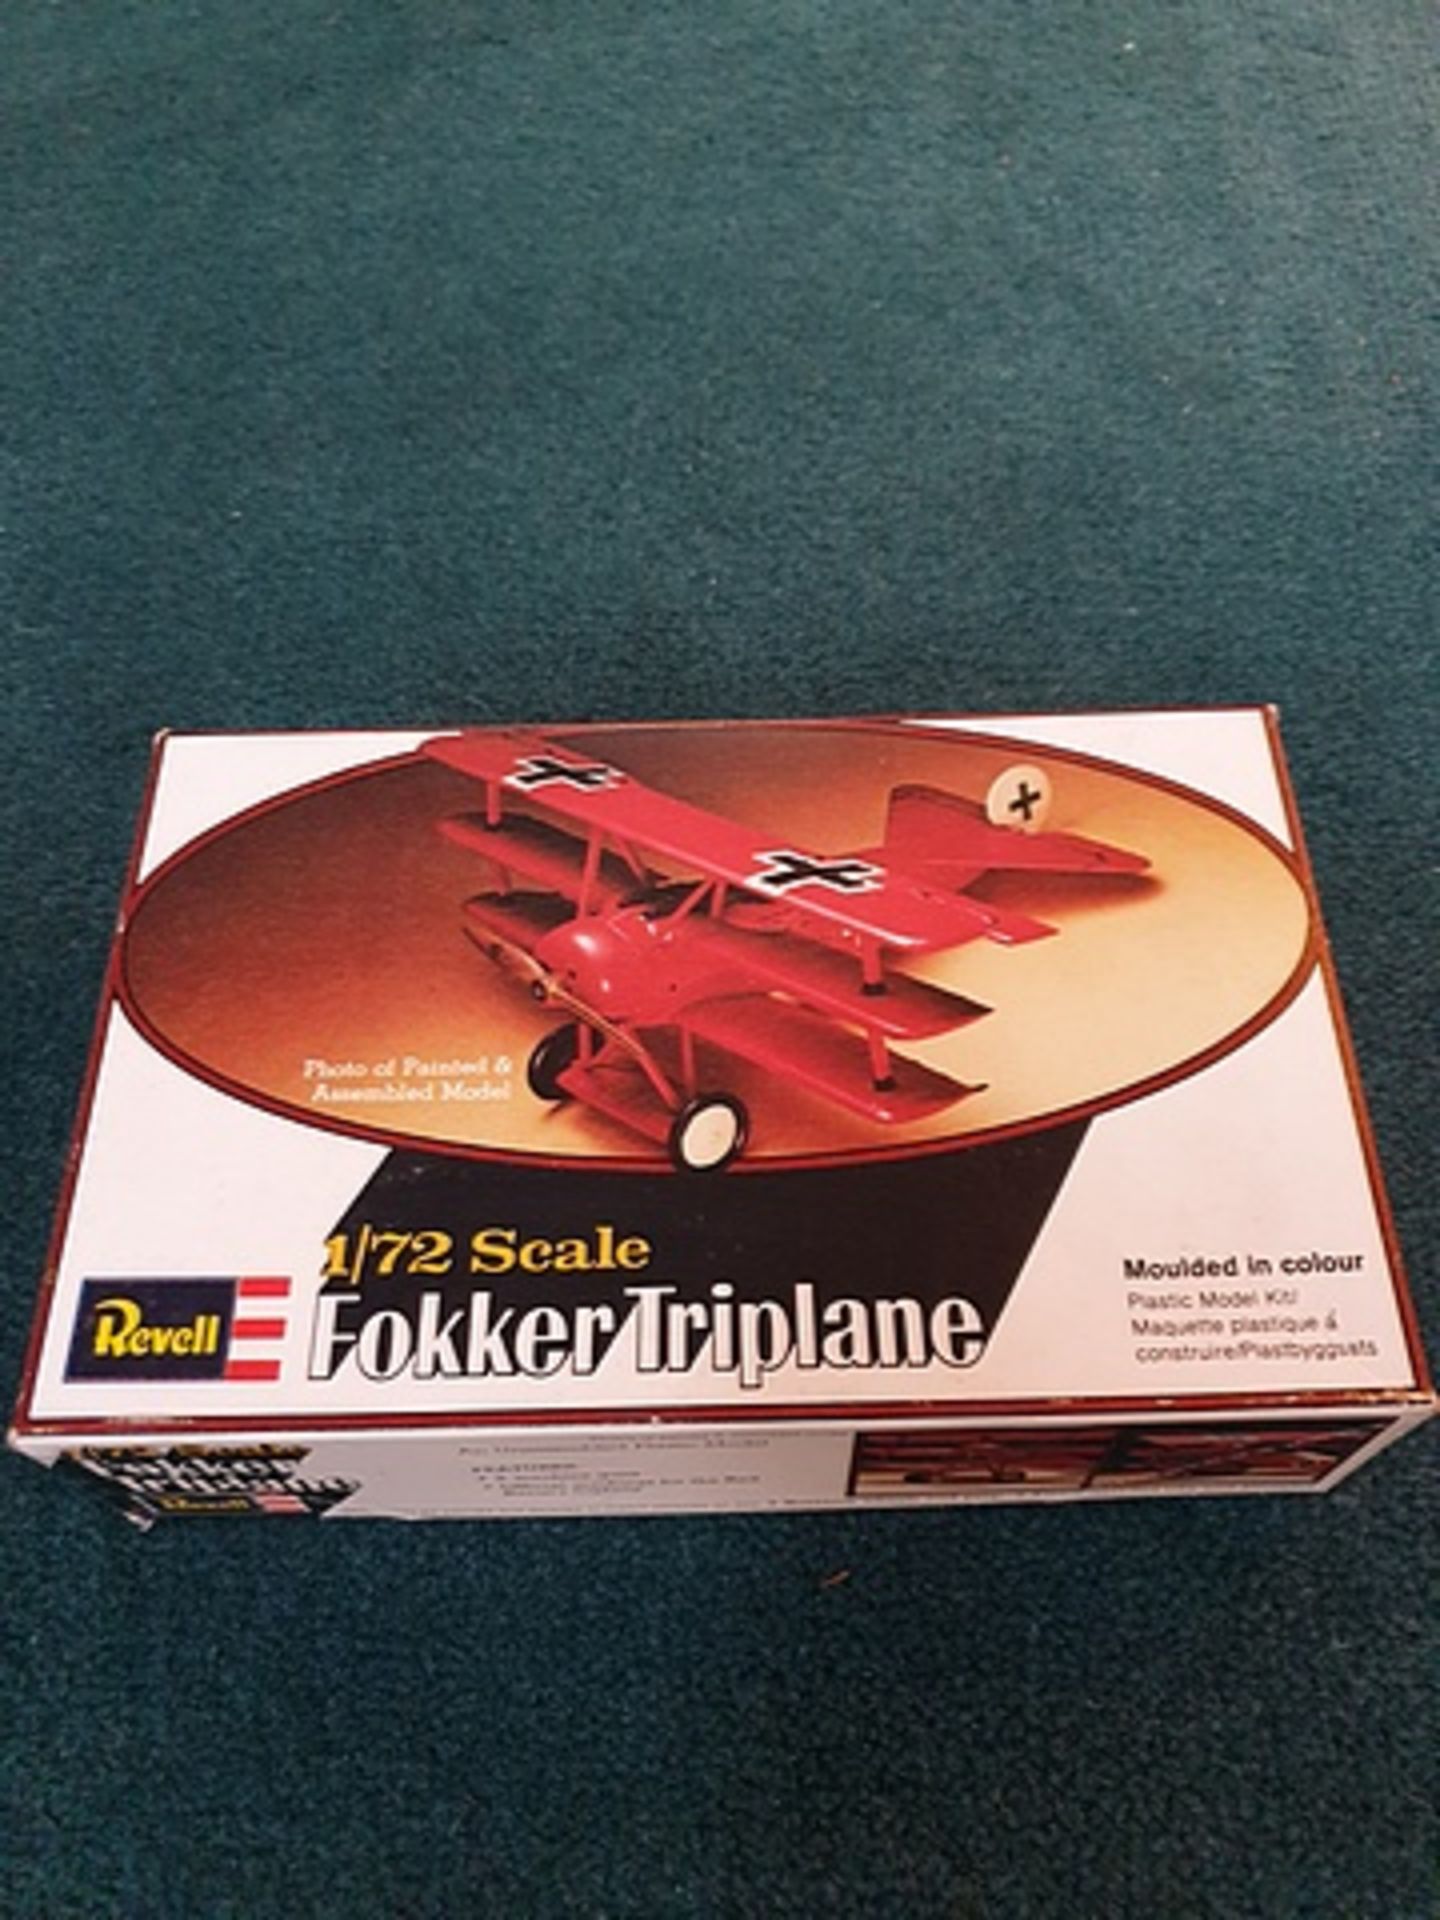 Revell scale 1/72 model H-52 Fokker Triplane model airplane kit released 1979 complete in box